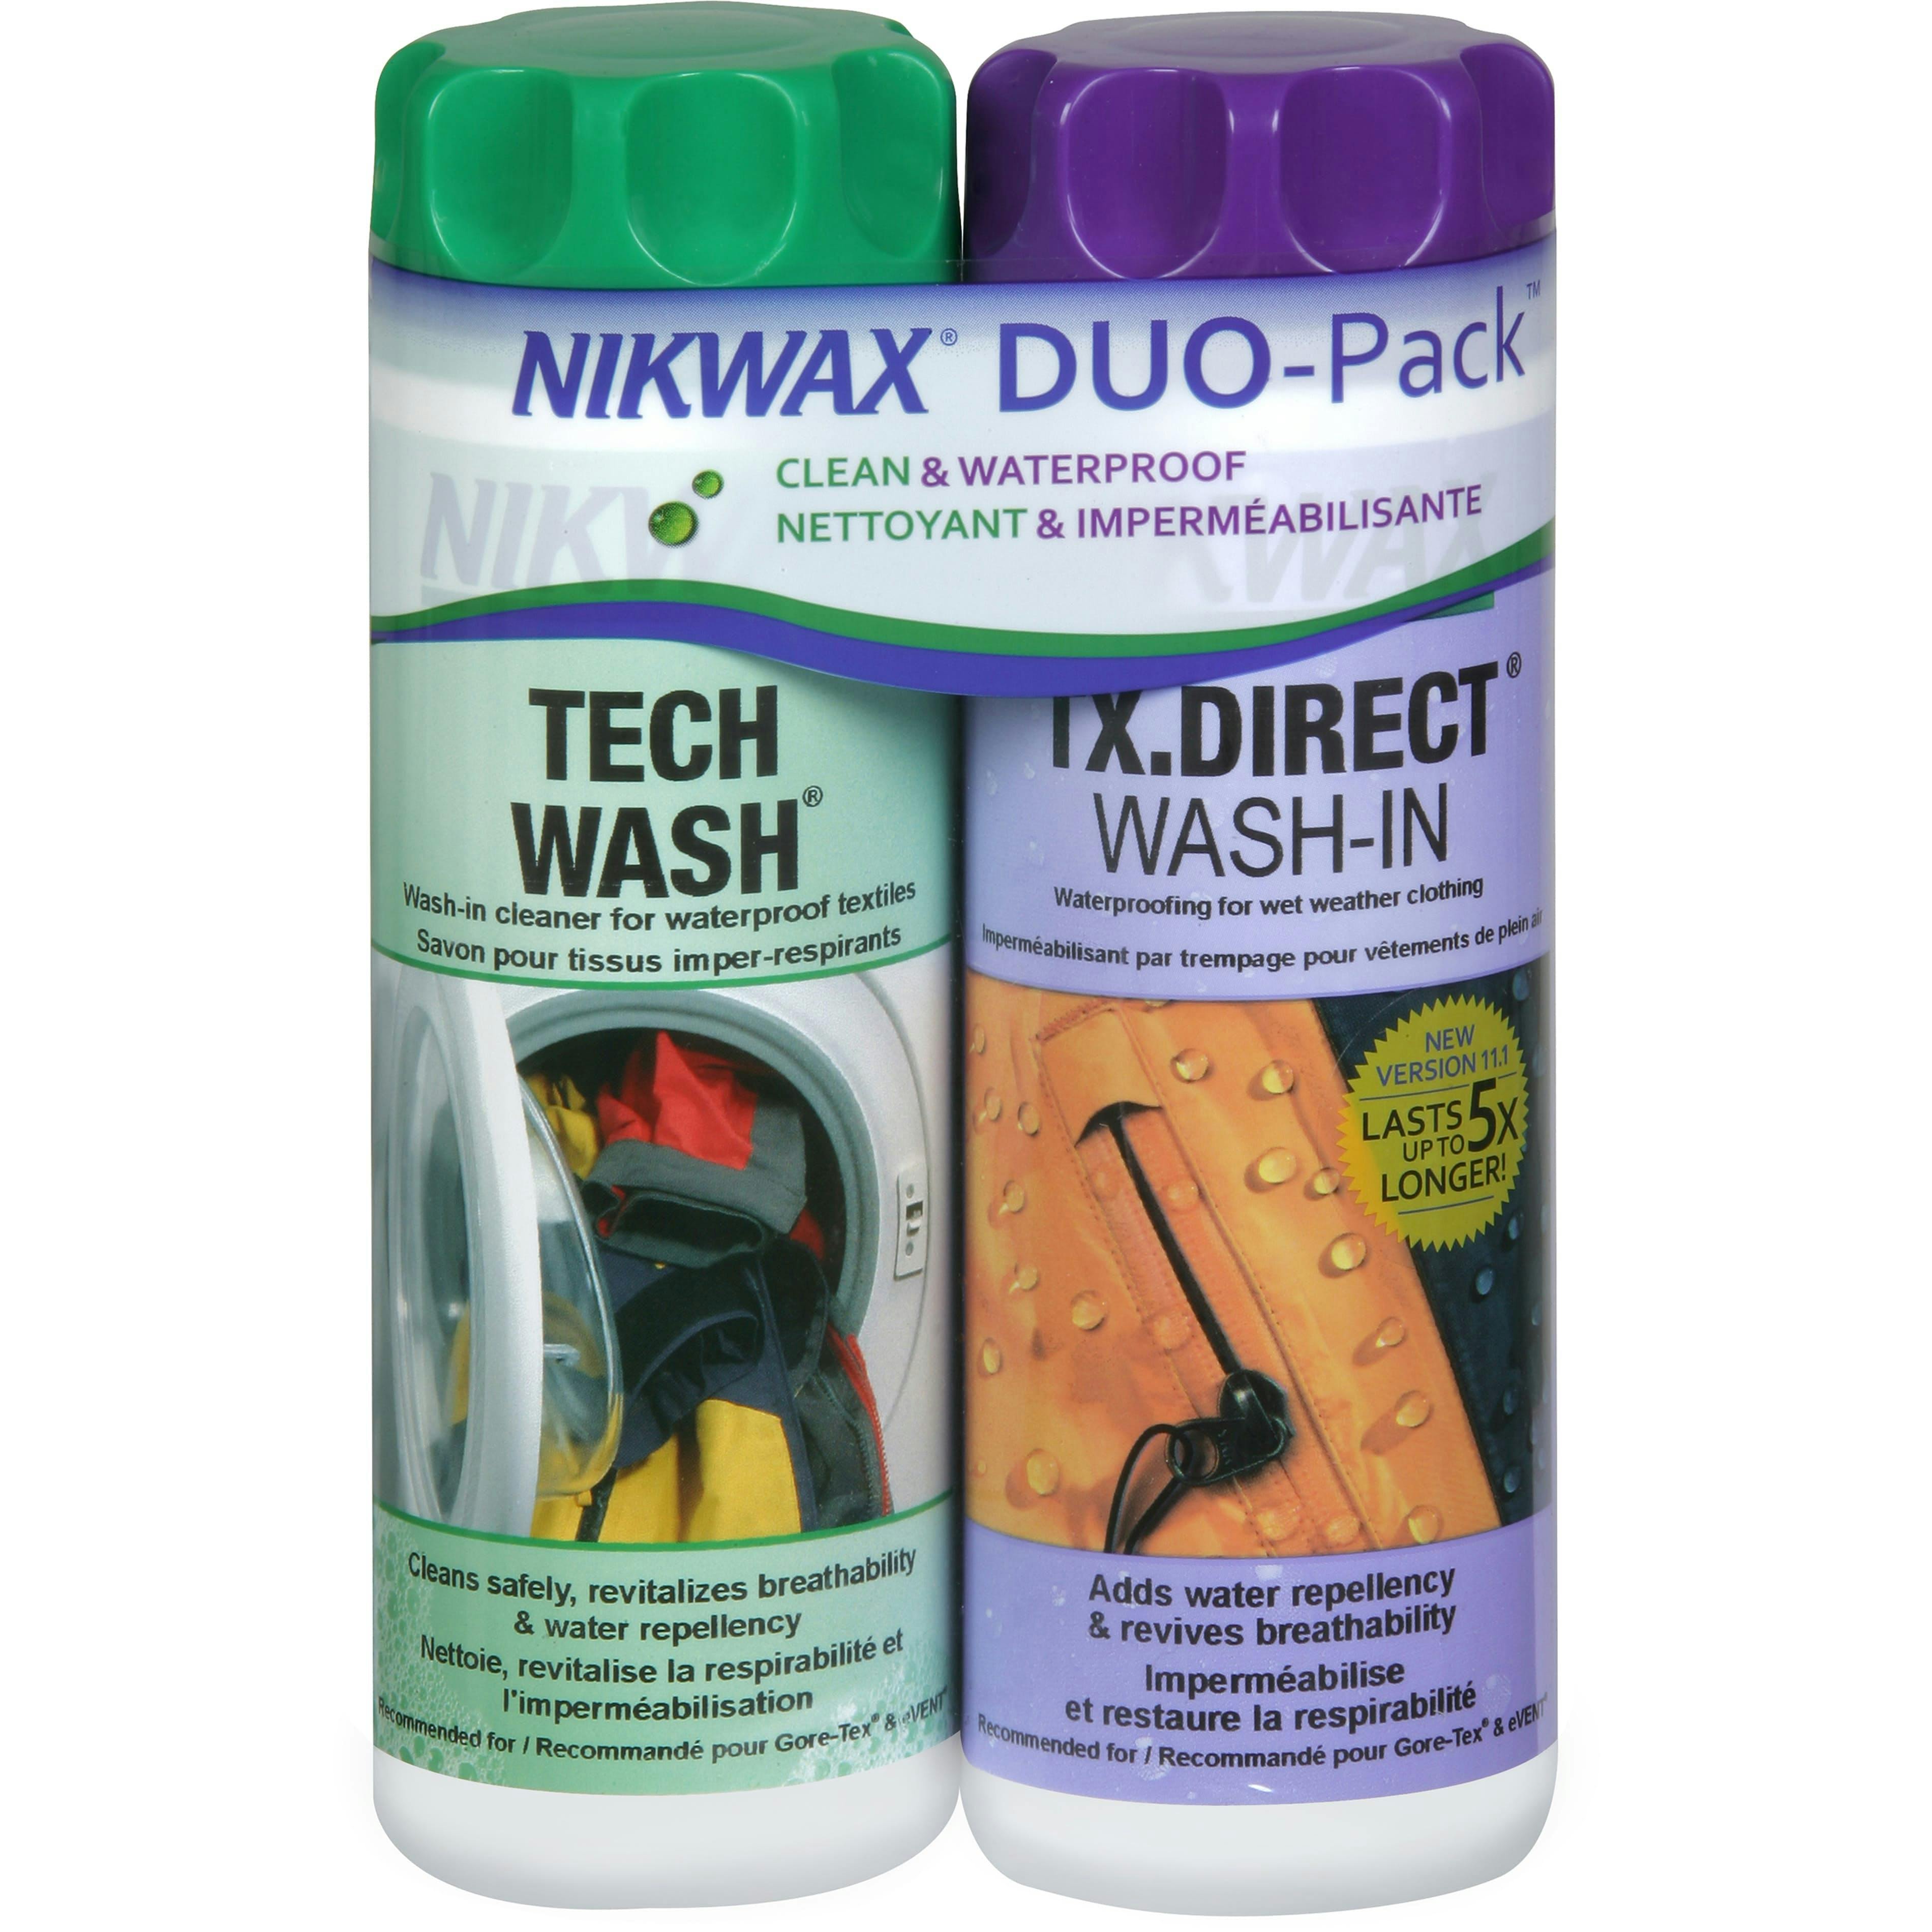 Nikwax tech wash kit